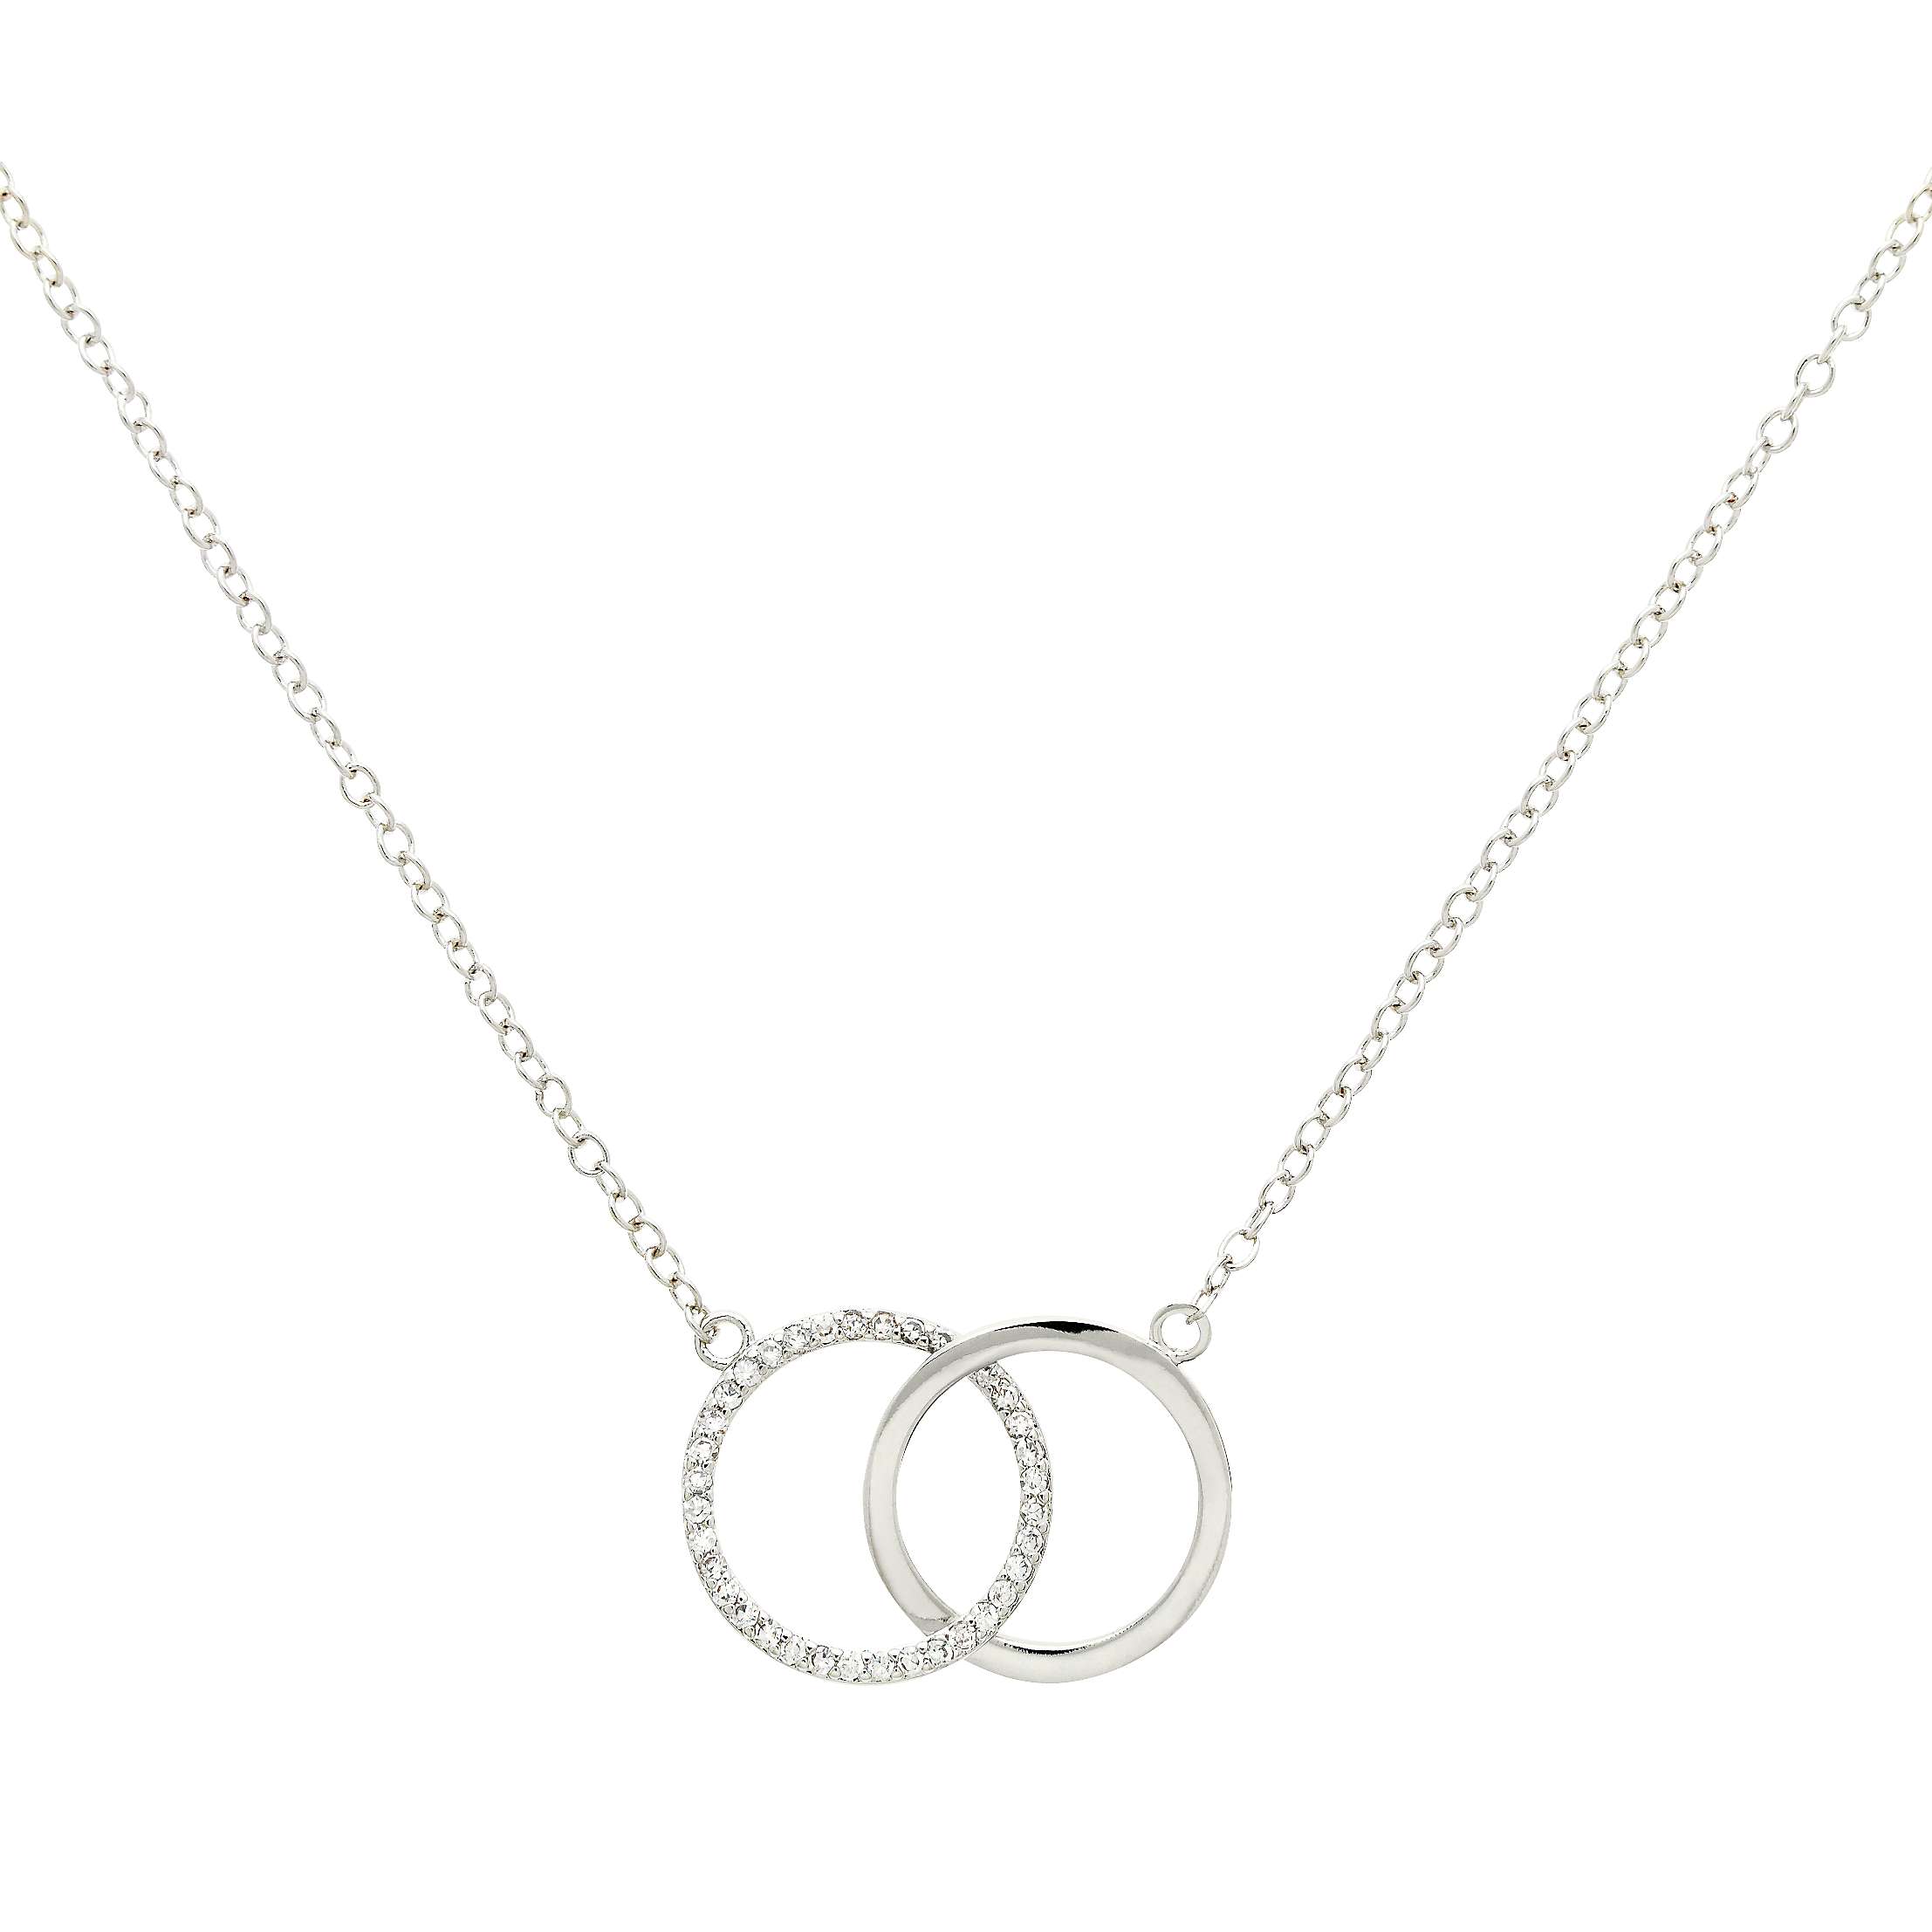 Buy Melissa Odabash Glass Crystal Double Circle Pendant Necklace Online at johnlewis.com